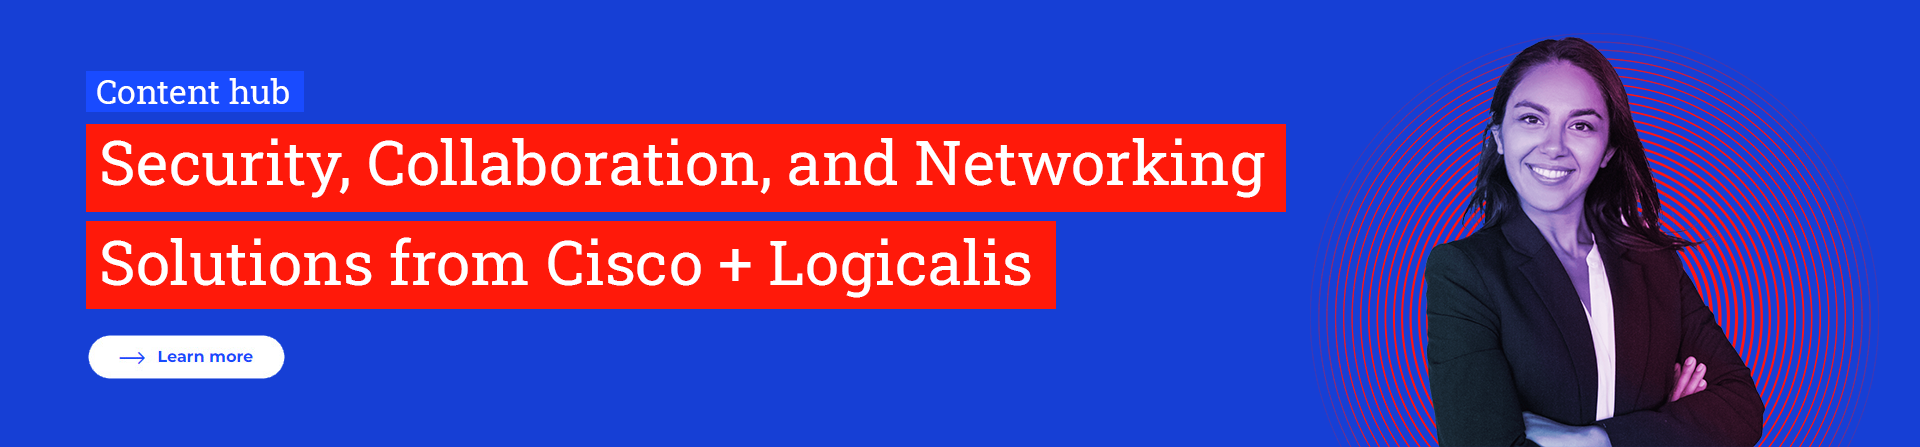 Logicalis+Cisco Content Hub